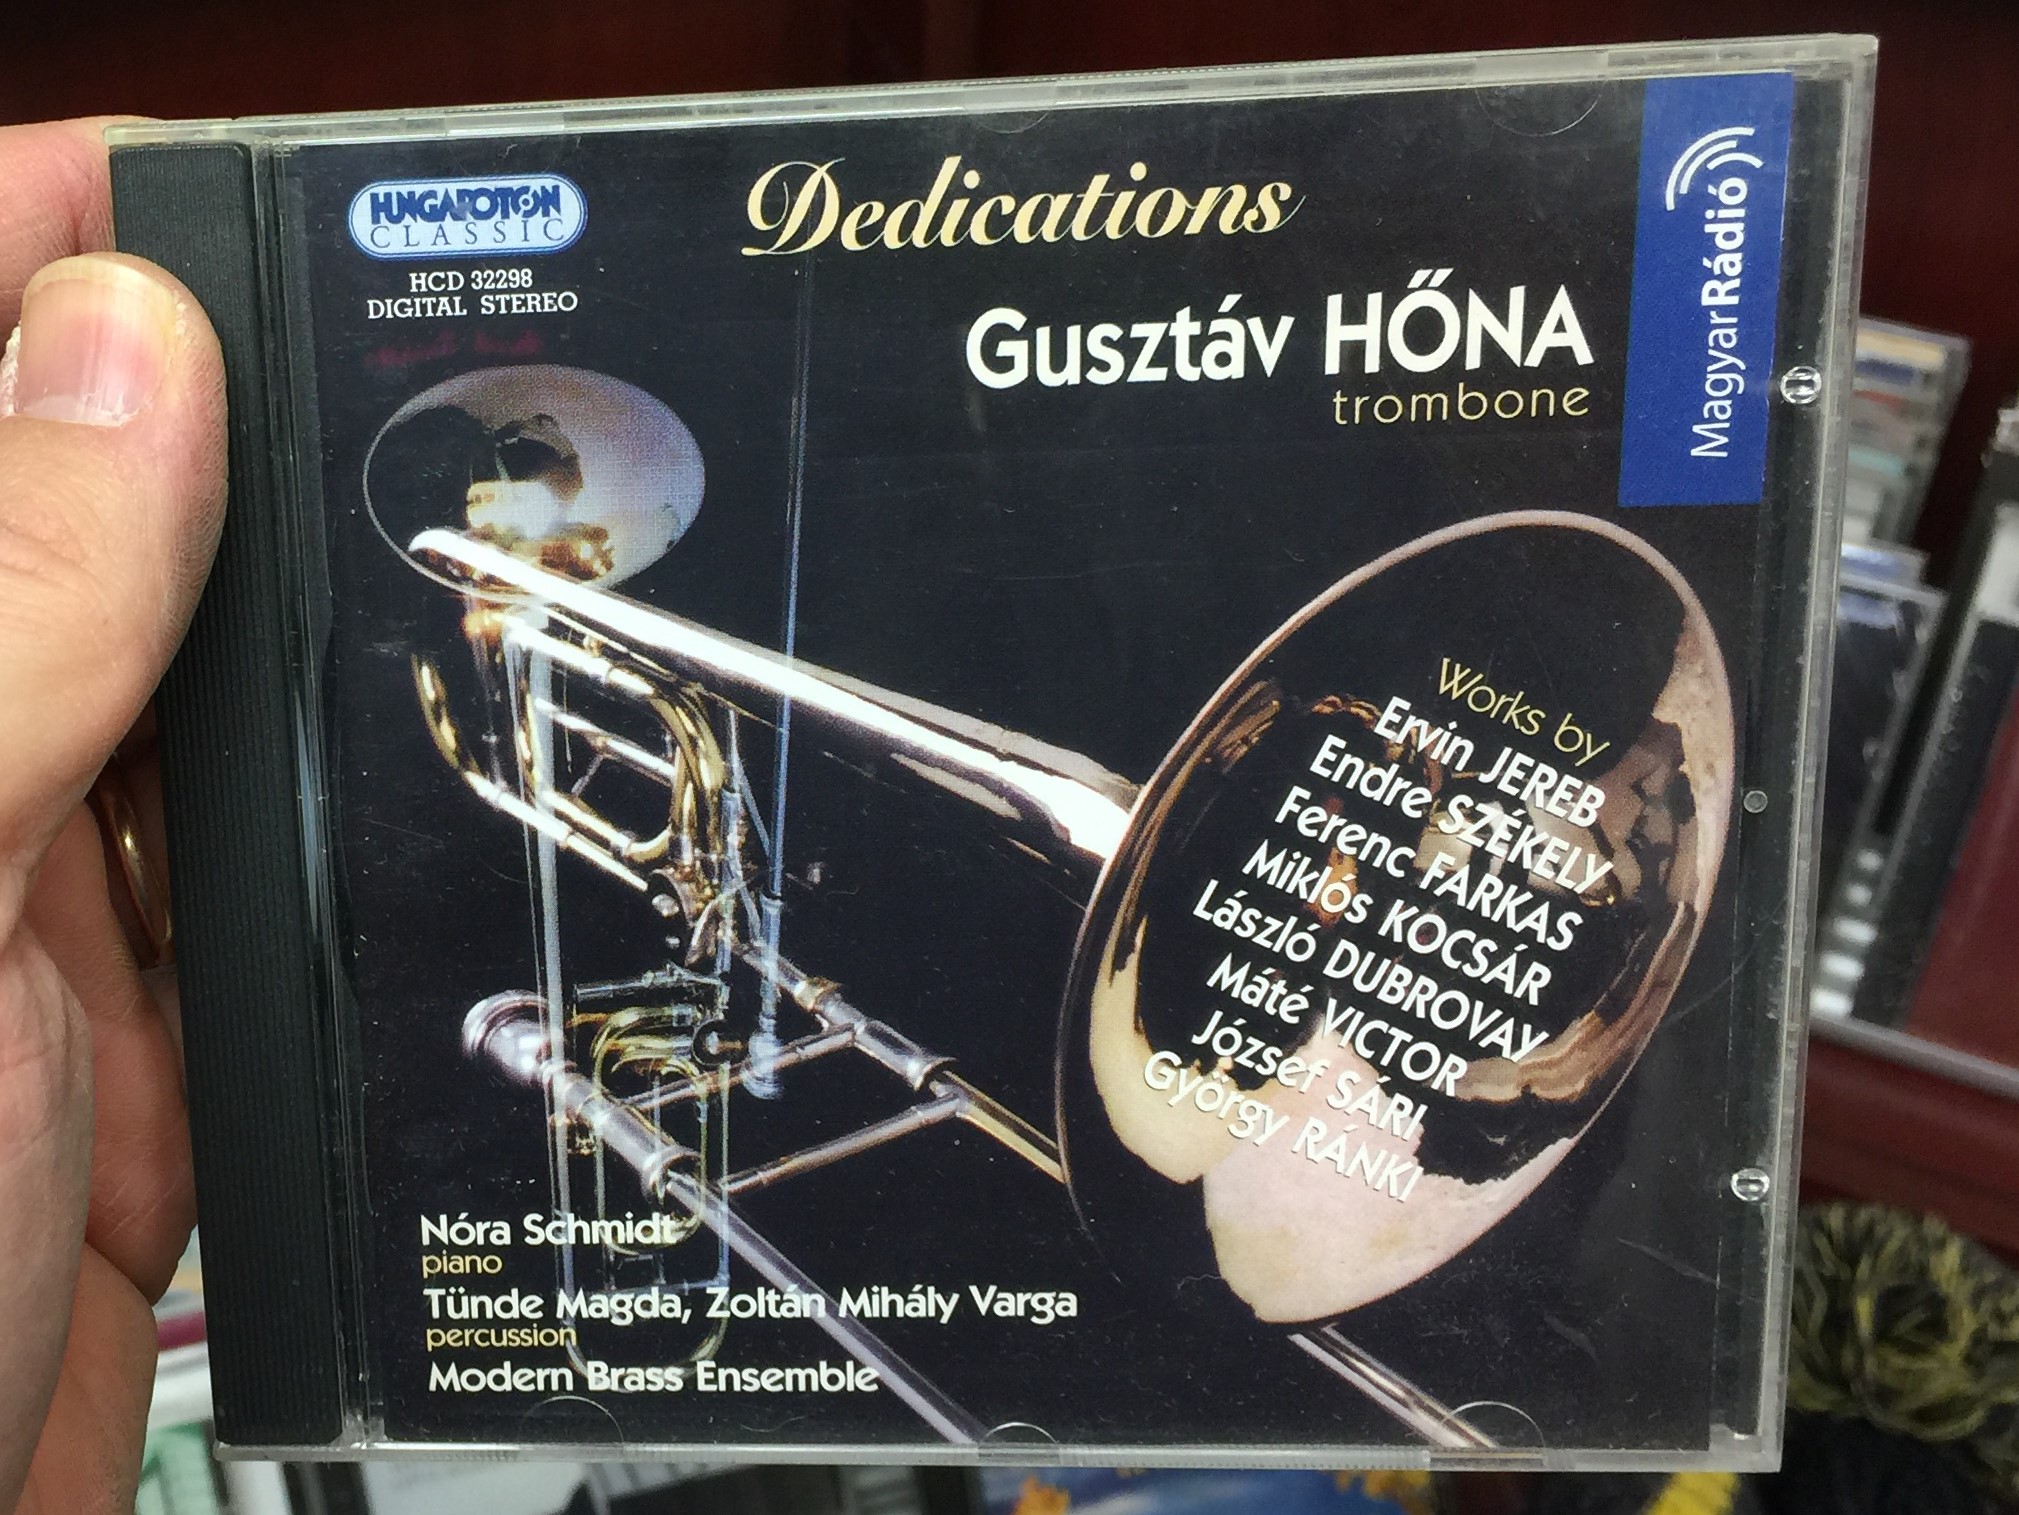 dedications-guszt-v-h-na-trombone-works-by-ervin-jereb-endre-sz-kely-ferenc-farkas-mikl-s-kocs-r-n-ra-schmidt-piano-t-nde-magda-modern-brass-ensemble-hungaroton-classic-audio-cd-200-1-.jpg